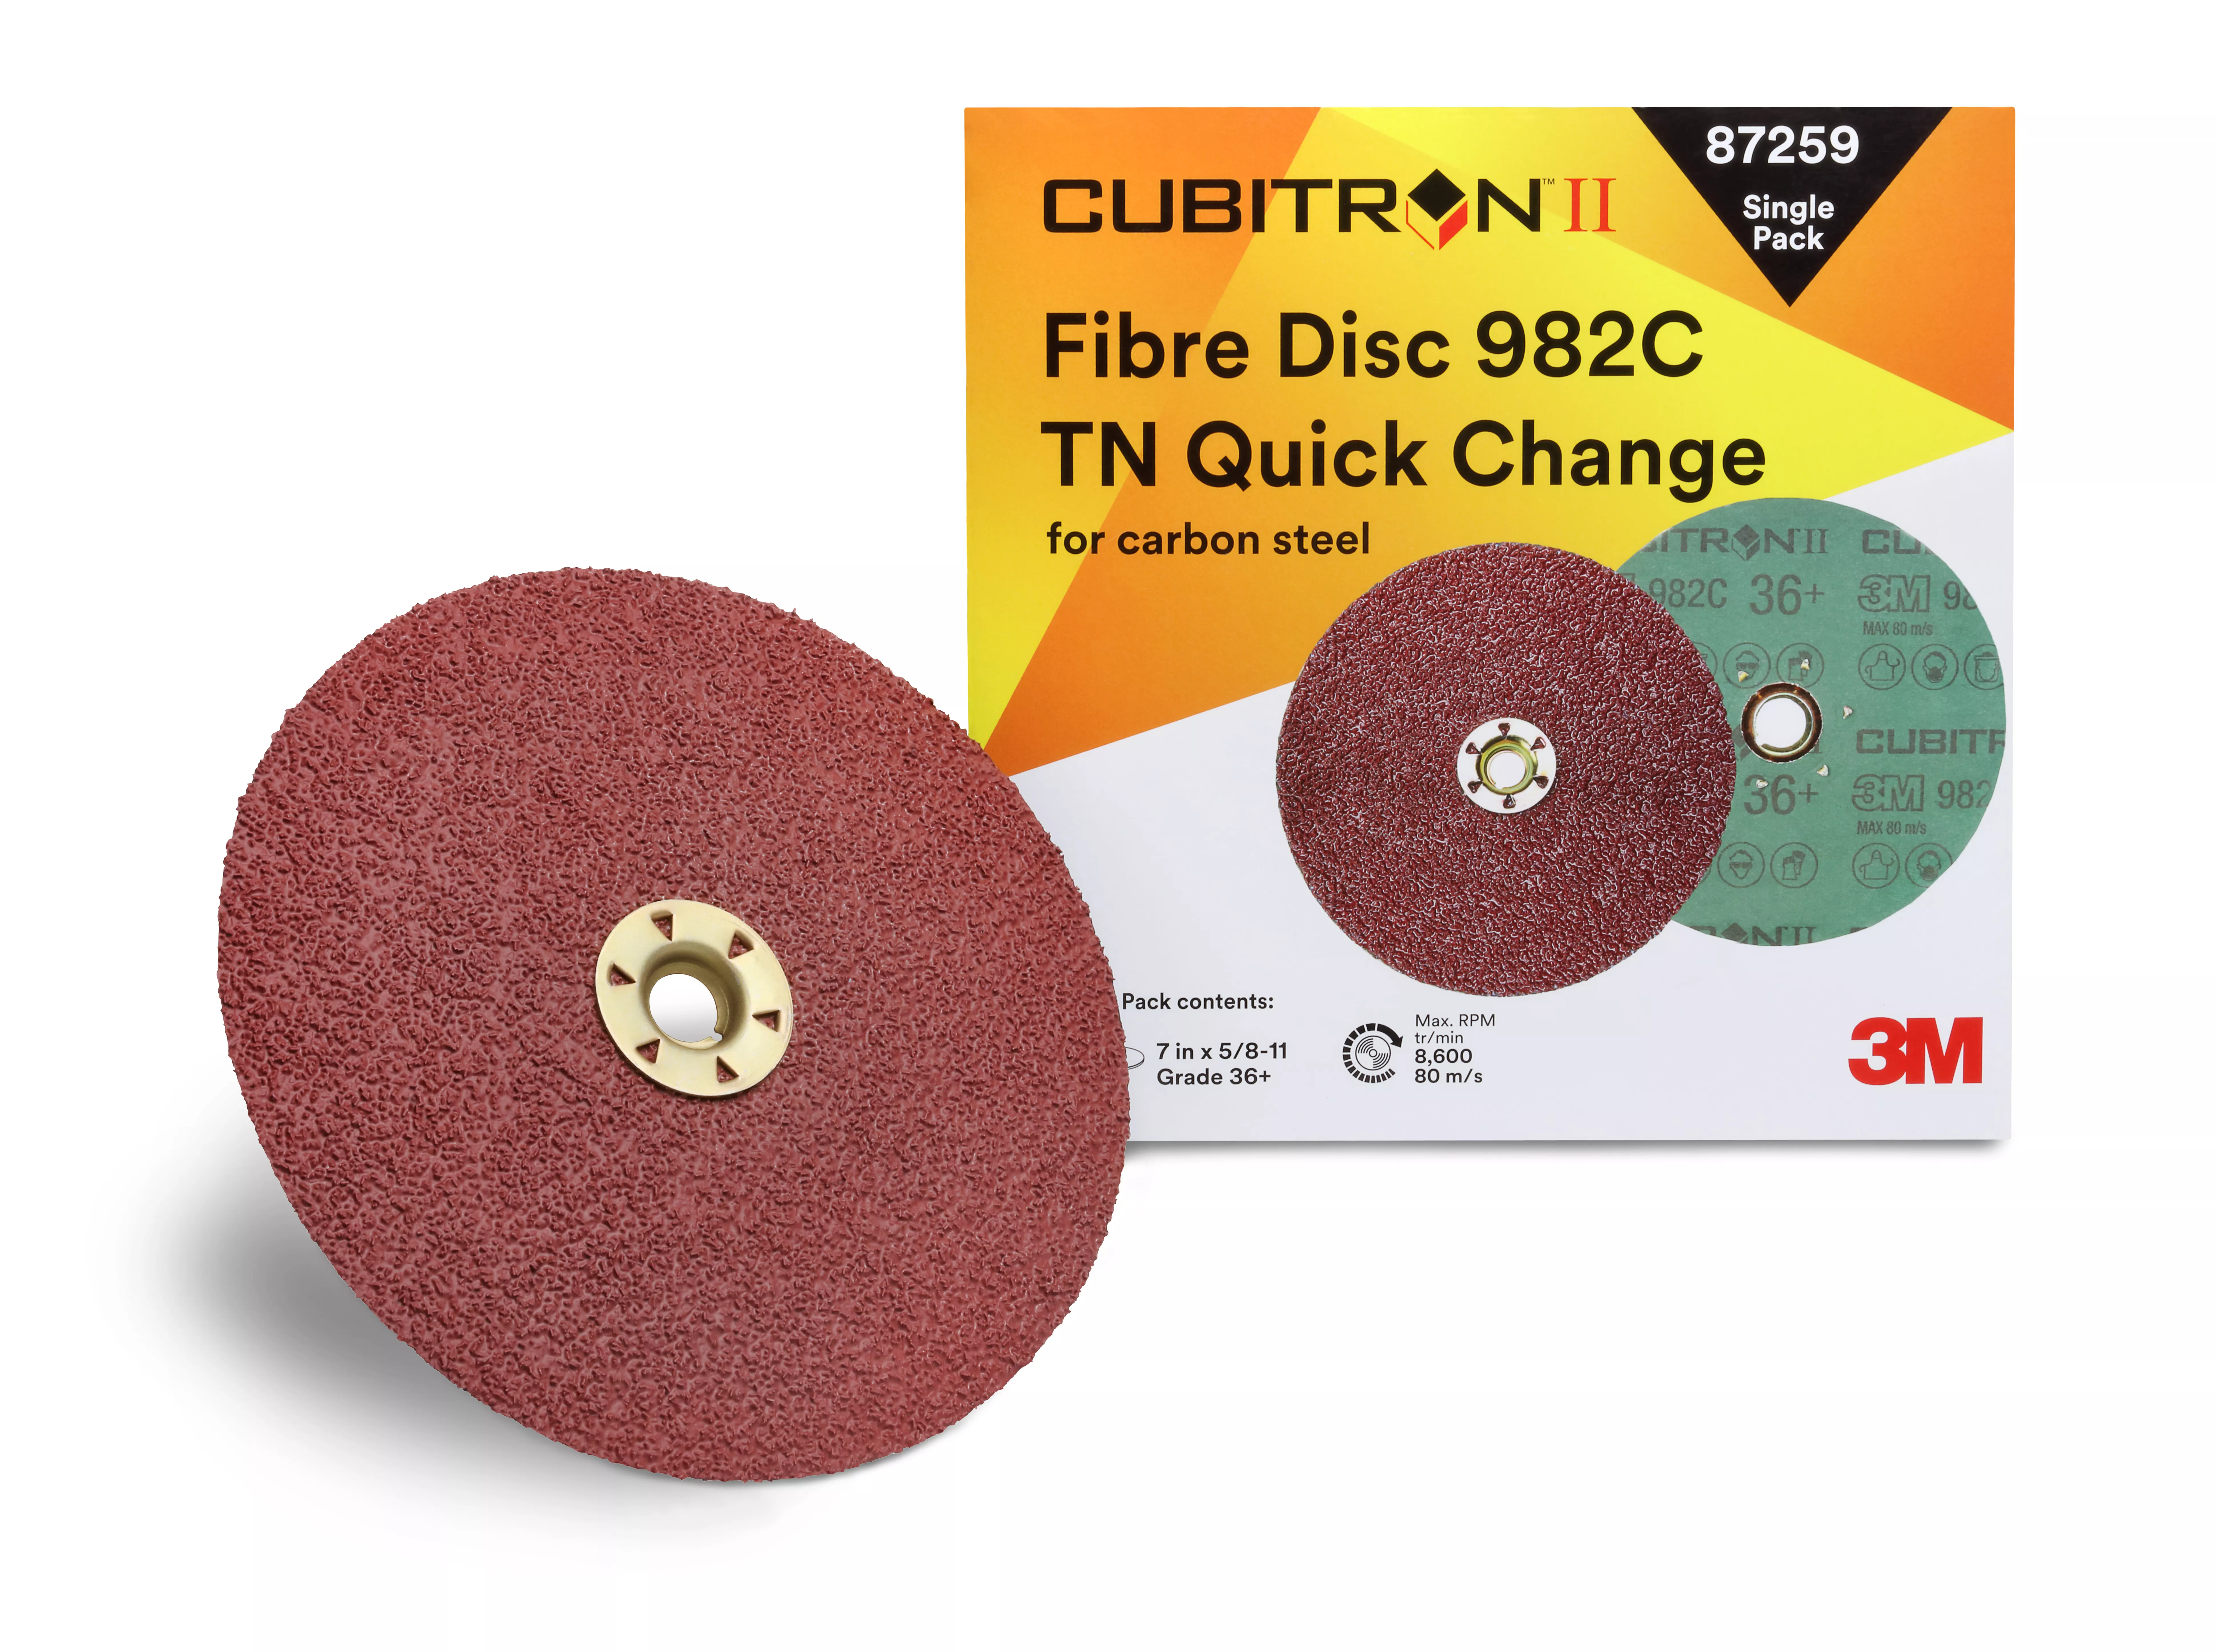 3M™ Cubitron™ II Fibre Disc 982C, 36+, TN Quick Change, 7 in, Die
TN700BB, Trial Pack, 10 ea/Case